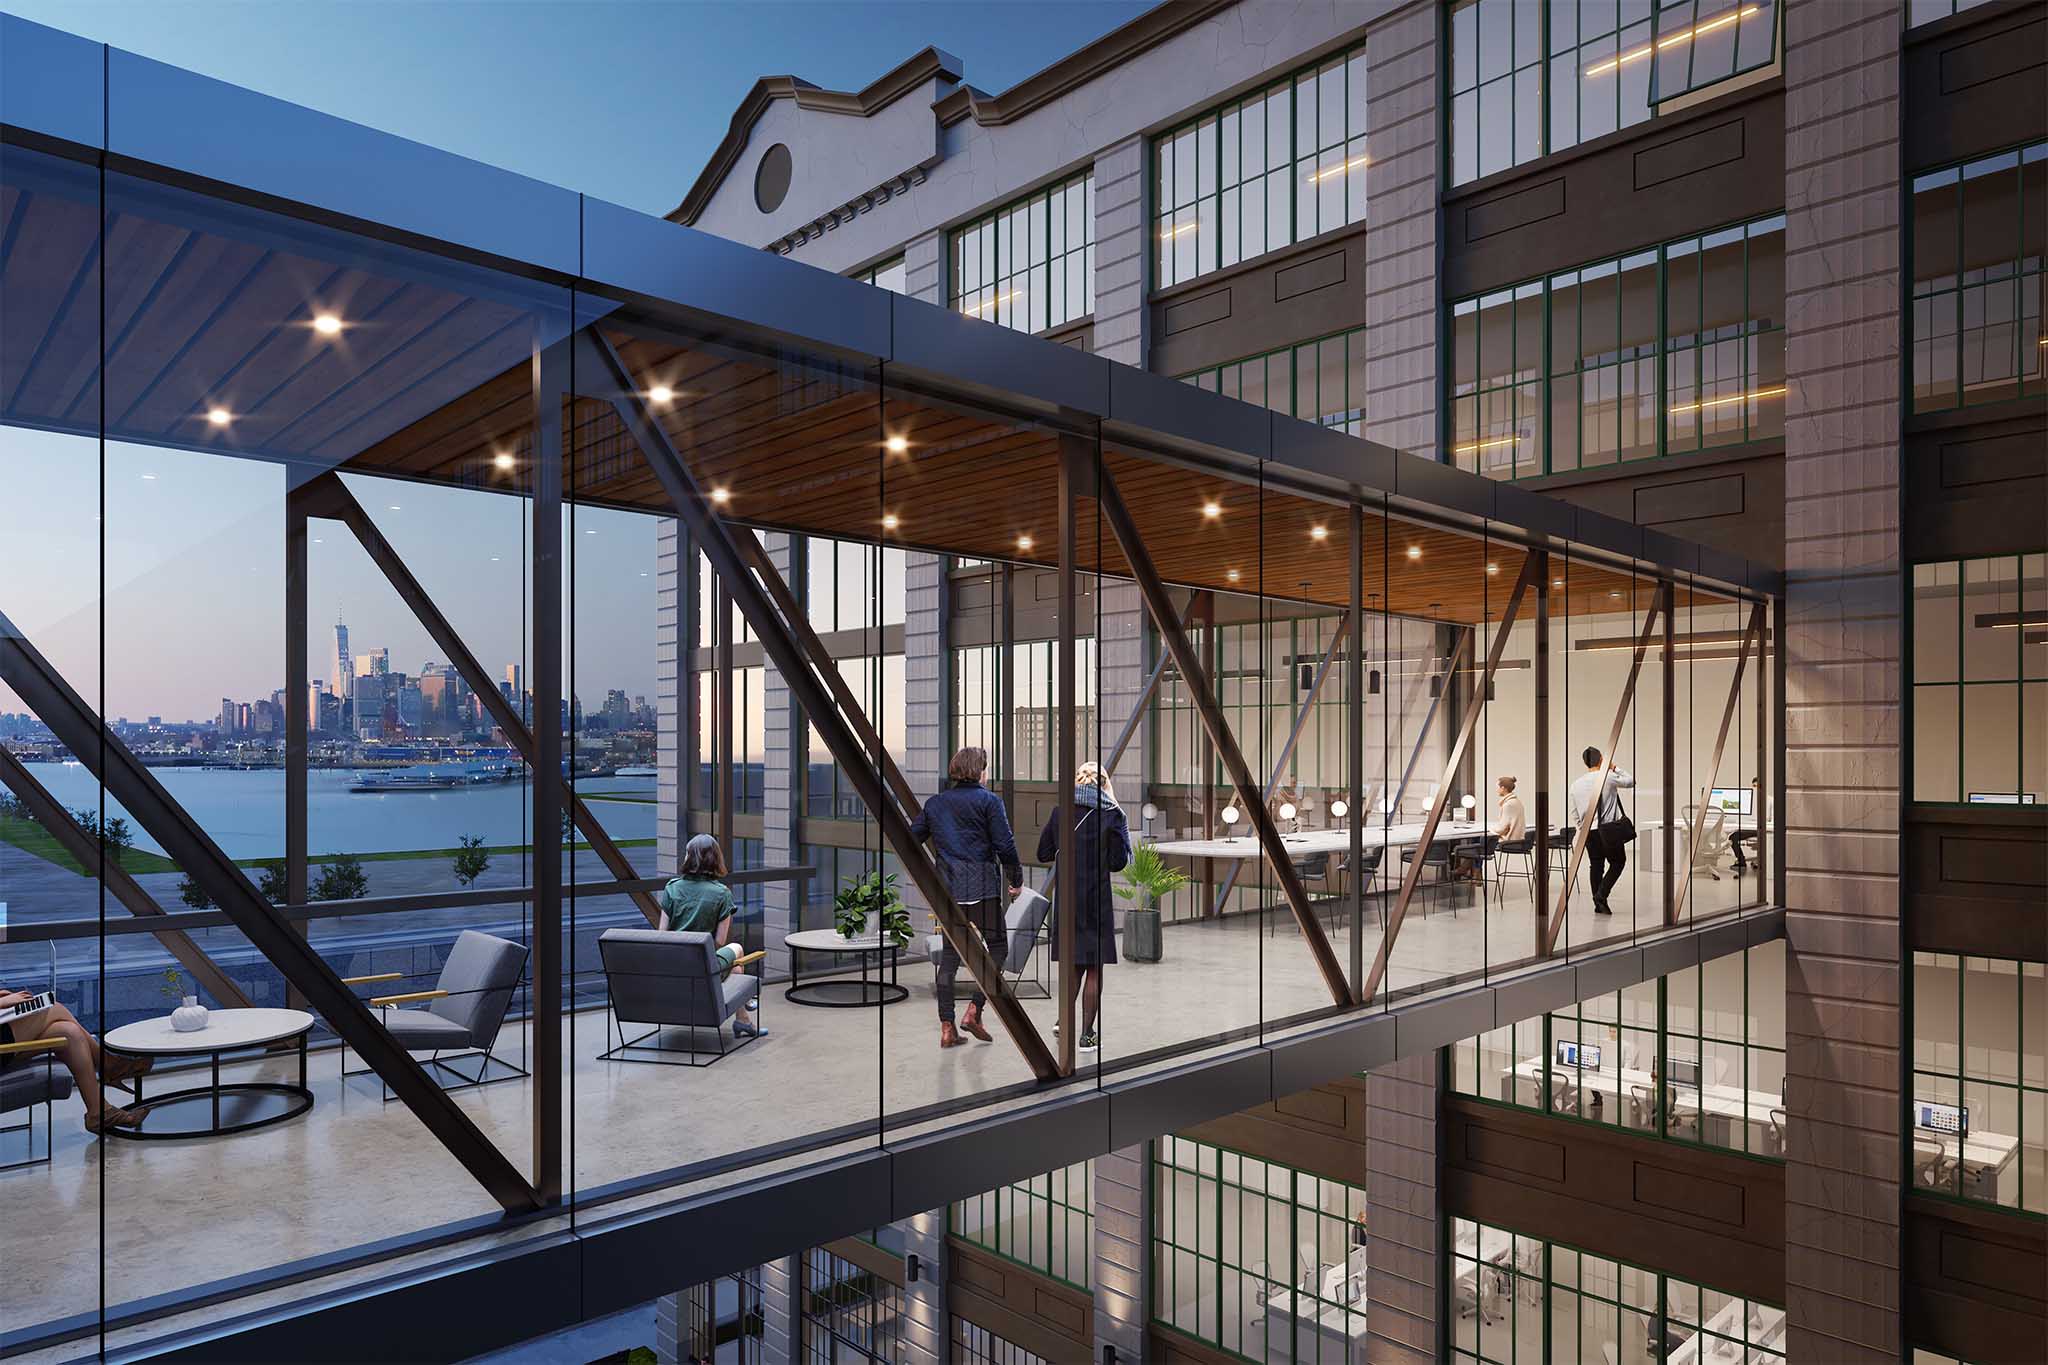 industry city rendering real estate new york